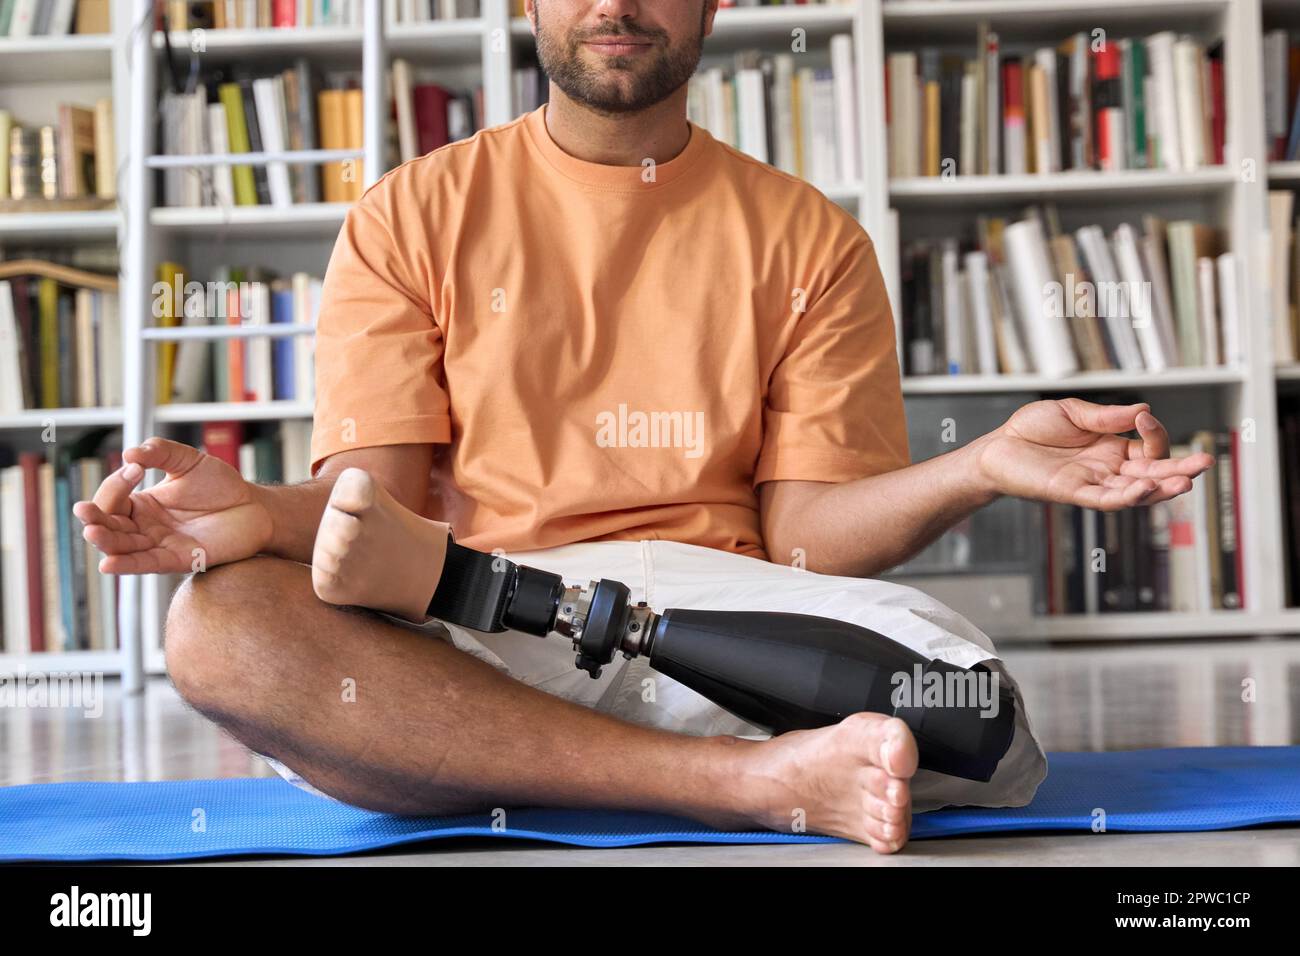 Amputee man with prosthetic leg prosthesis meditating doing yoga at home. Stock Photo